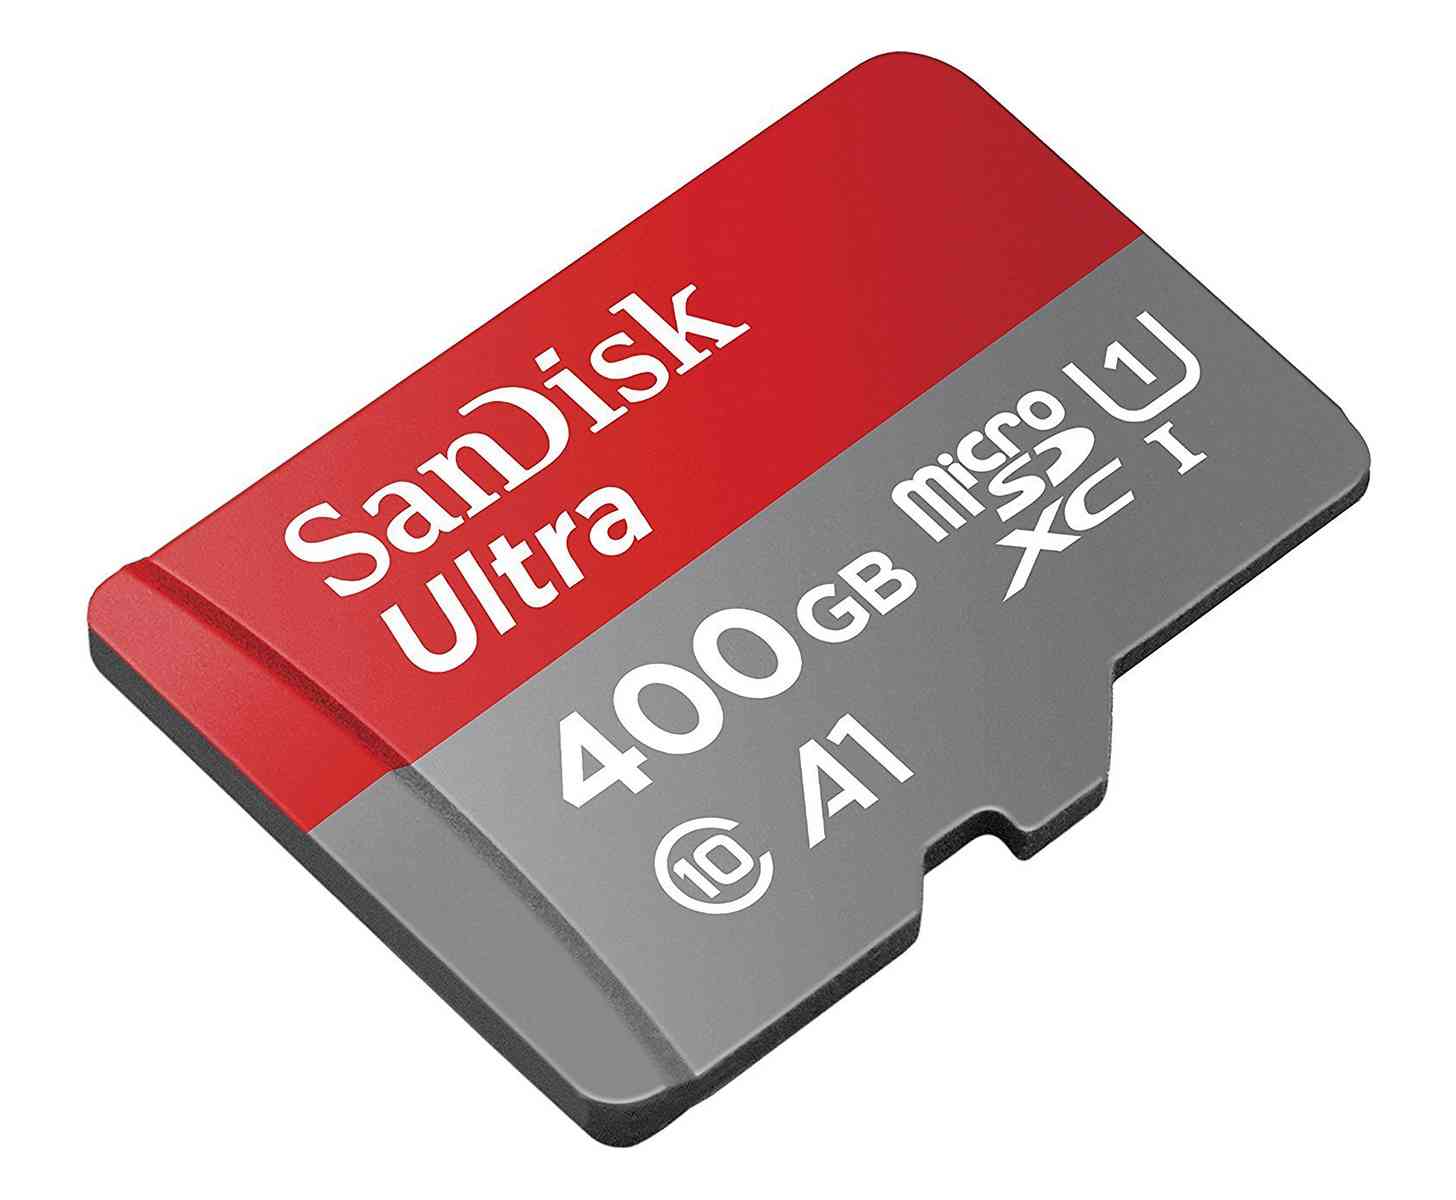 SanDisk 400GB microSD card official